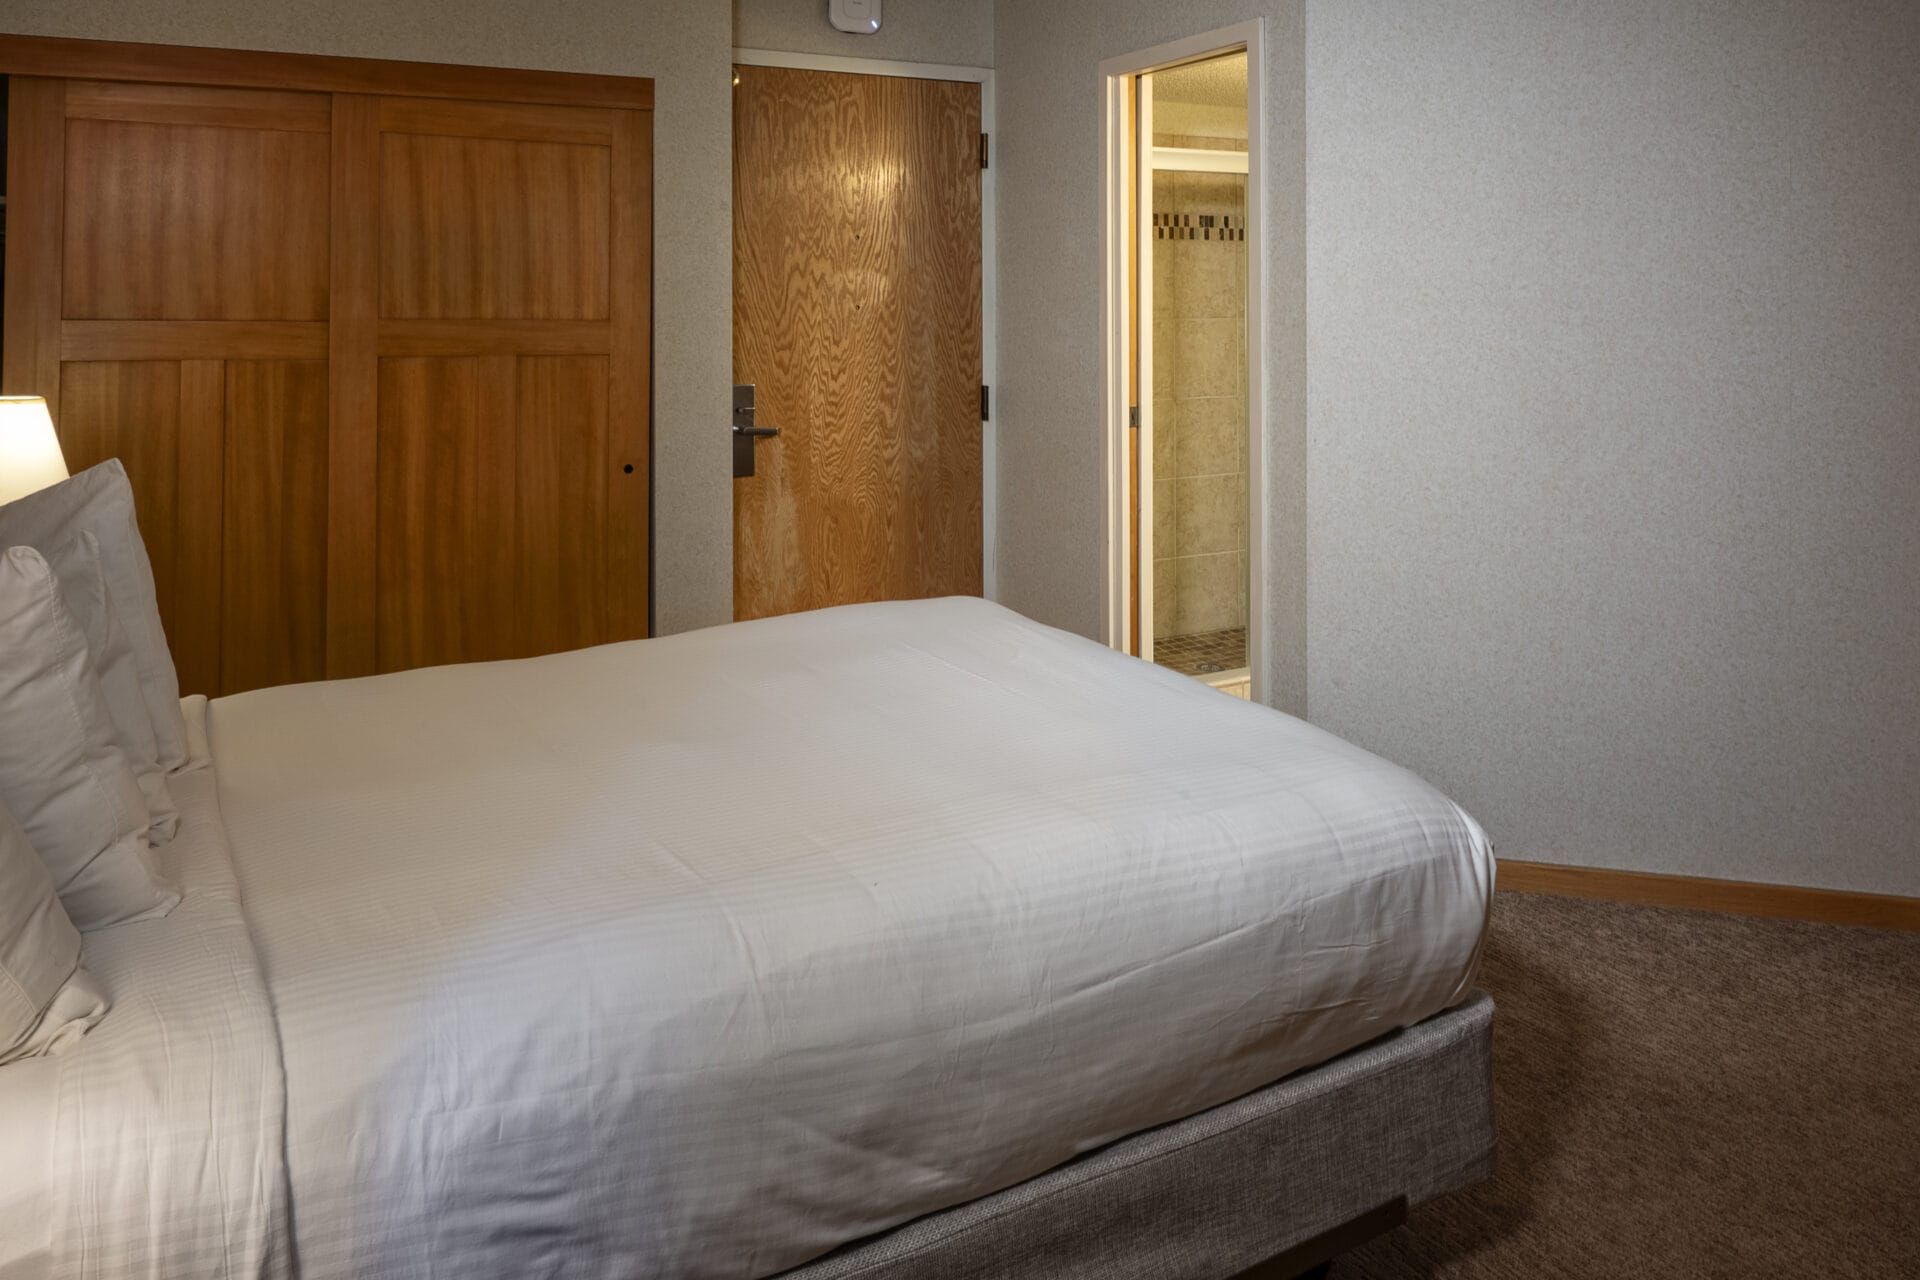 022-Room 4804 (B) - Bld 4 Two Bedroom